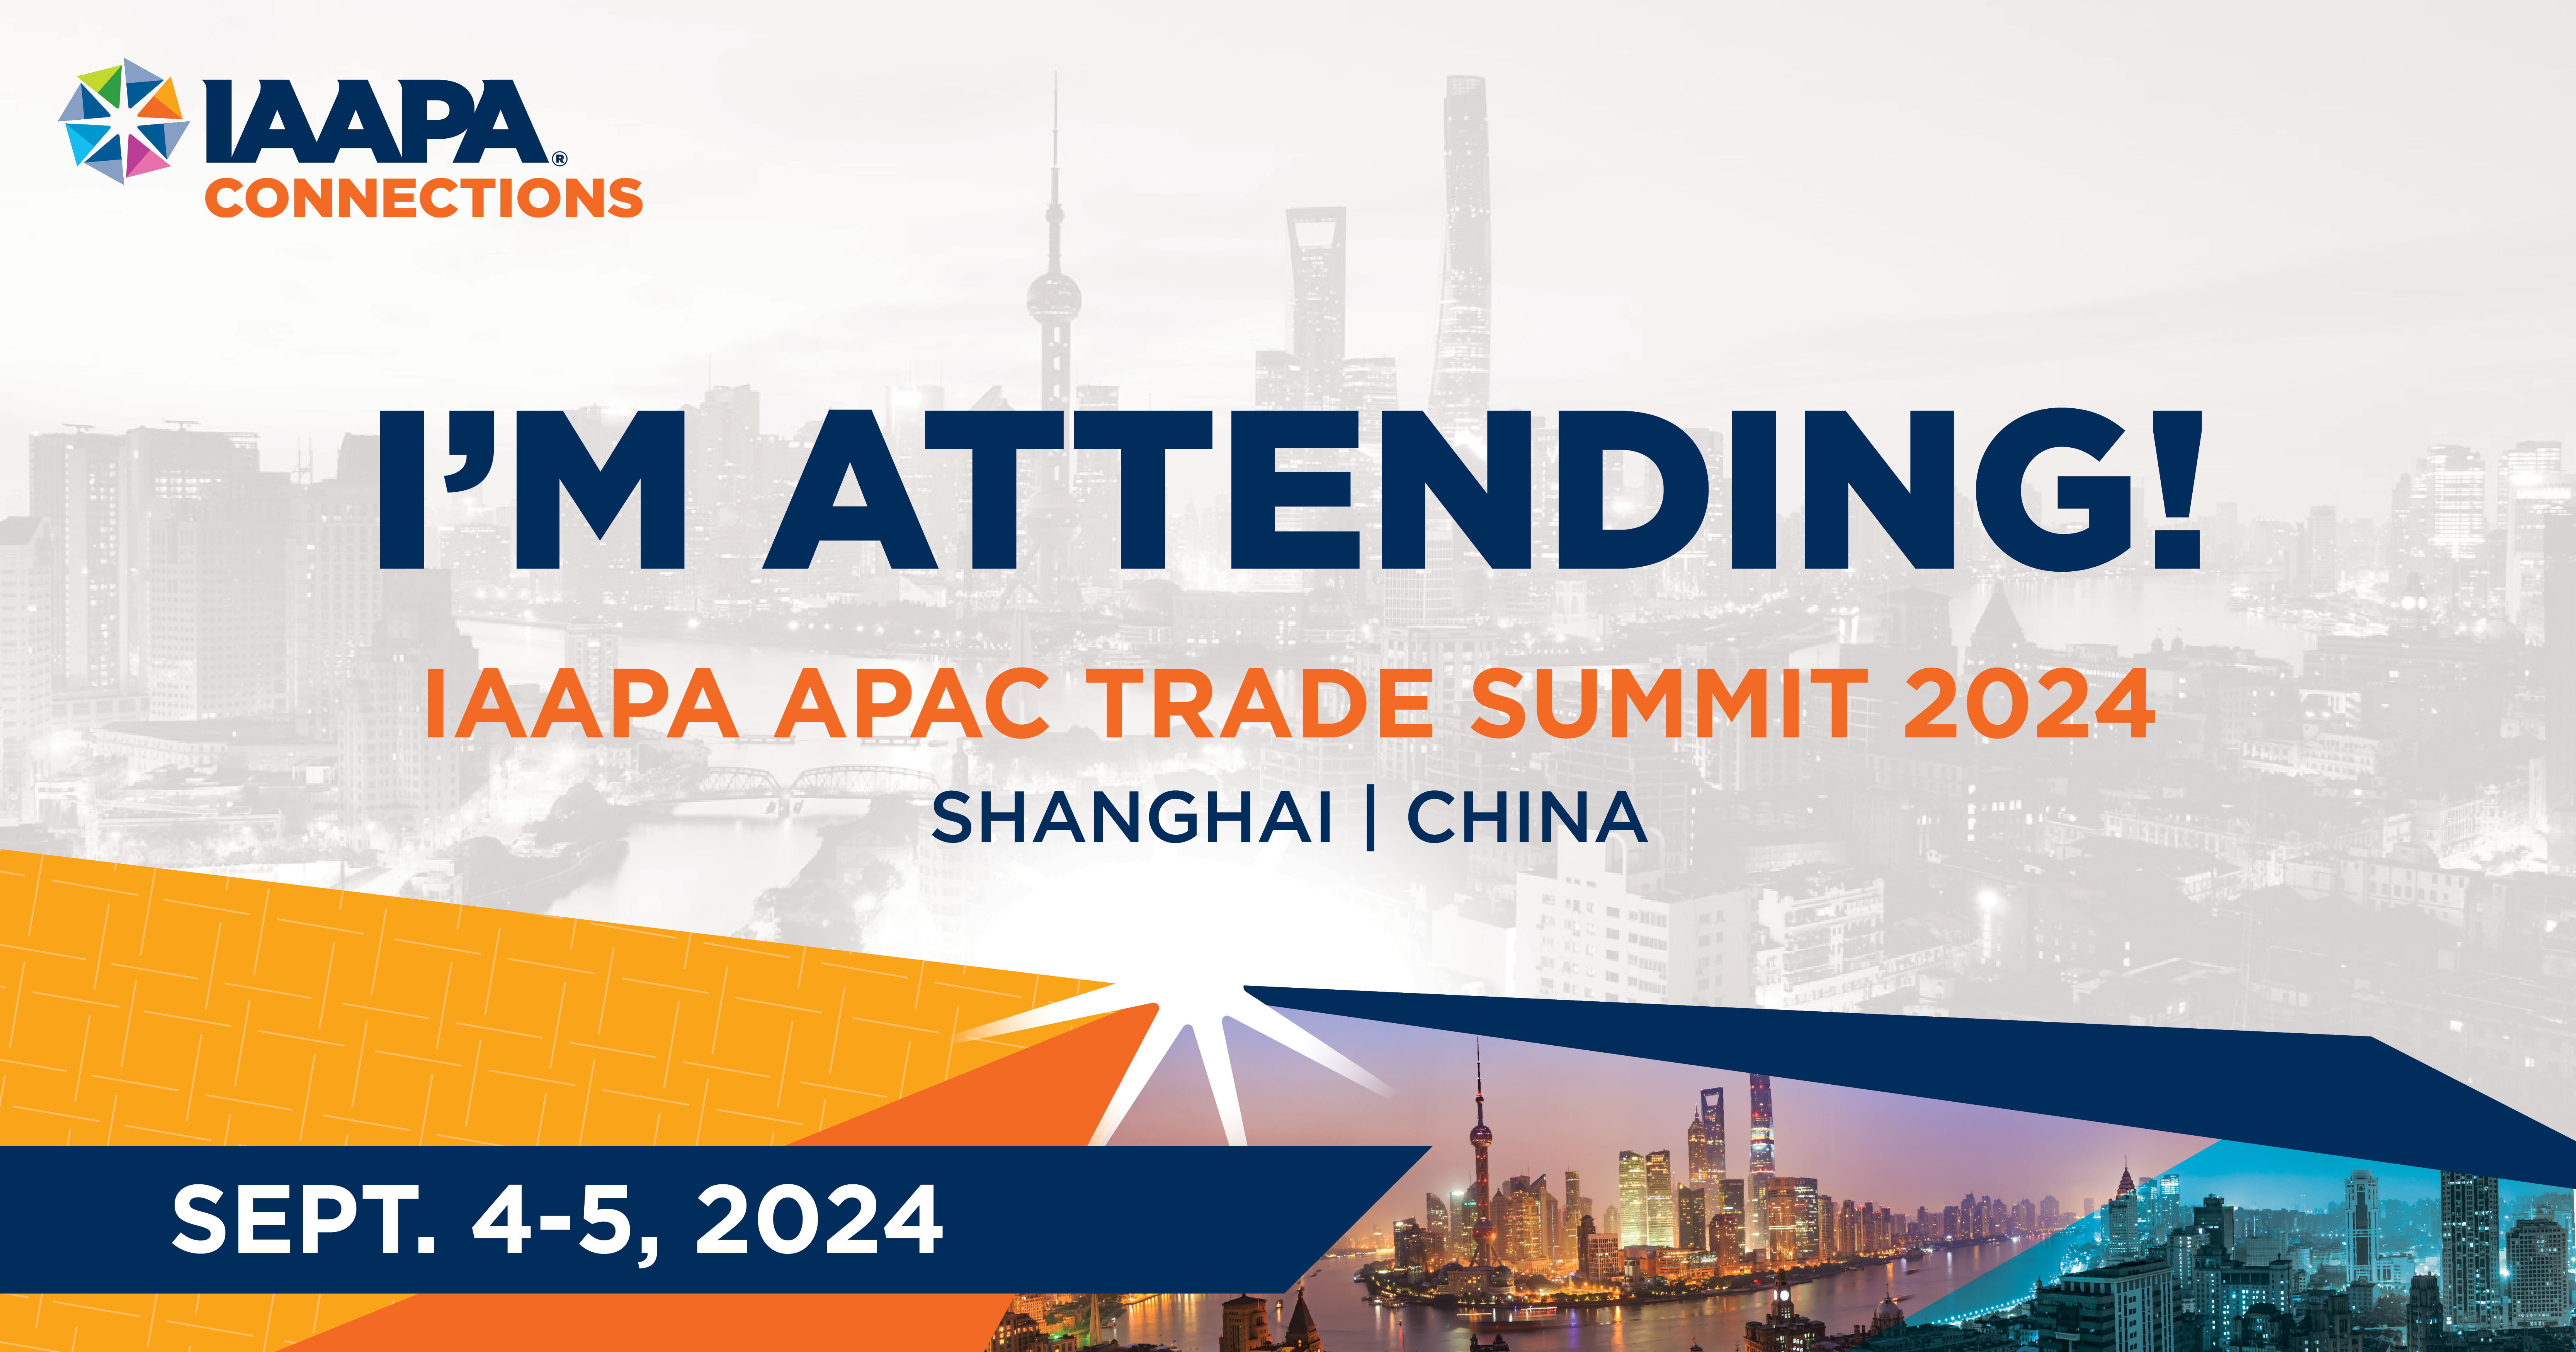 IAAPA APAC Trade Summit 2024 - I'm Attending